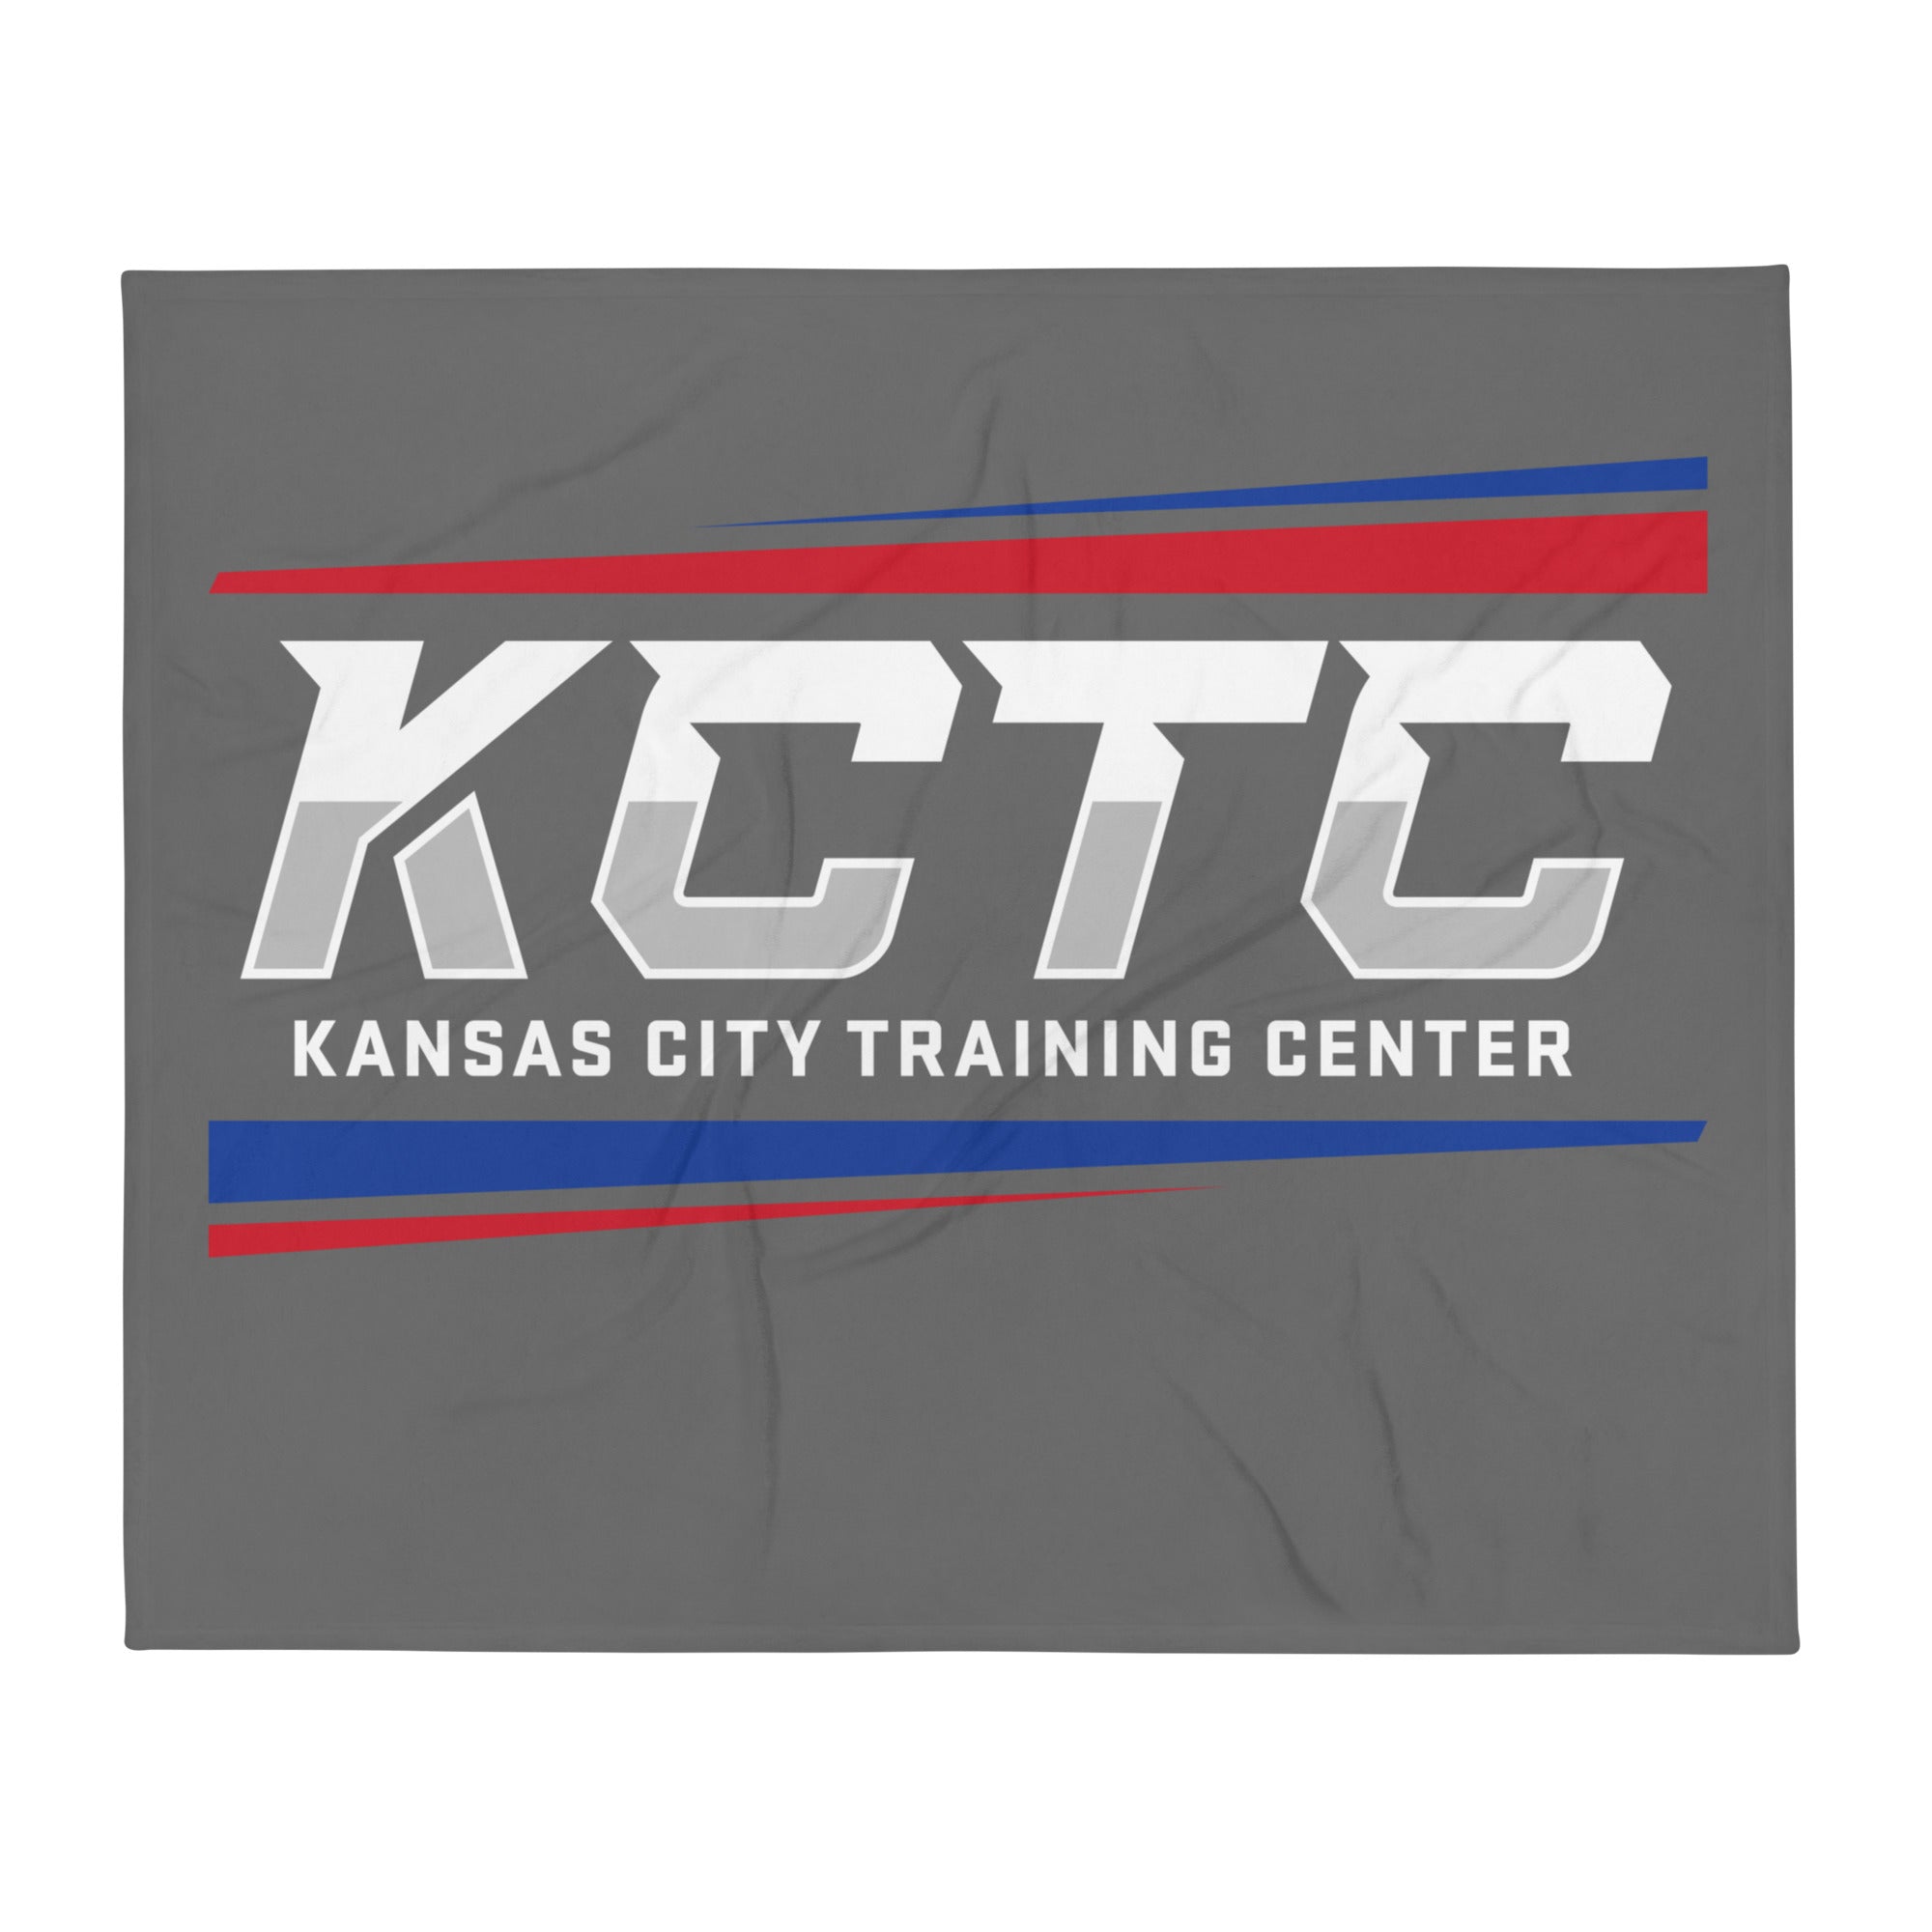 Kansas City Training Center Throw Blanket 50 x 60